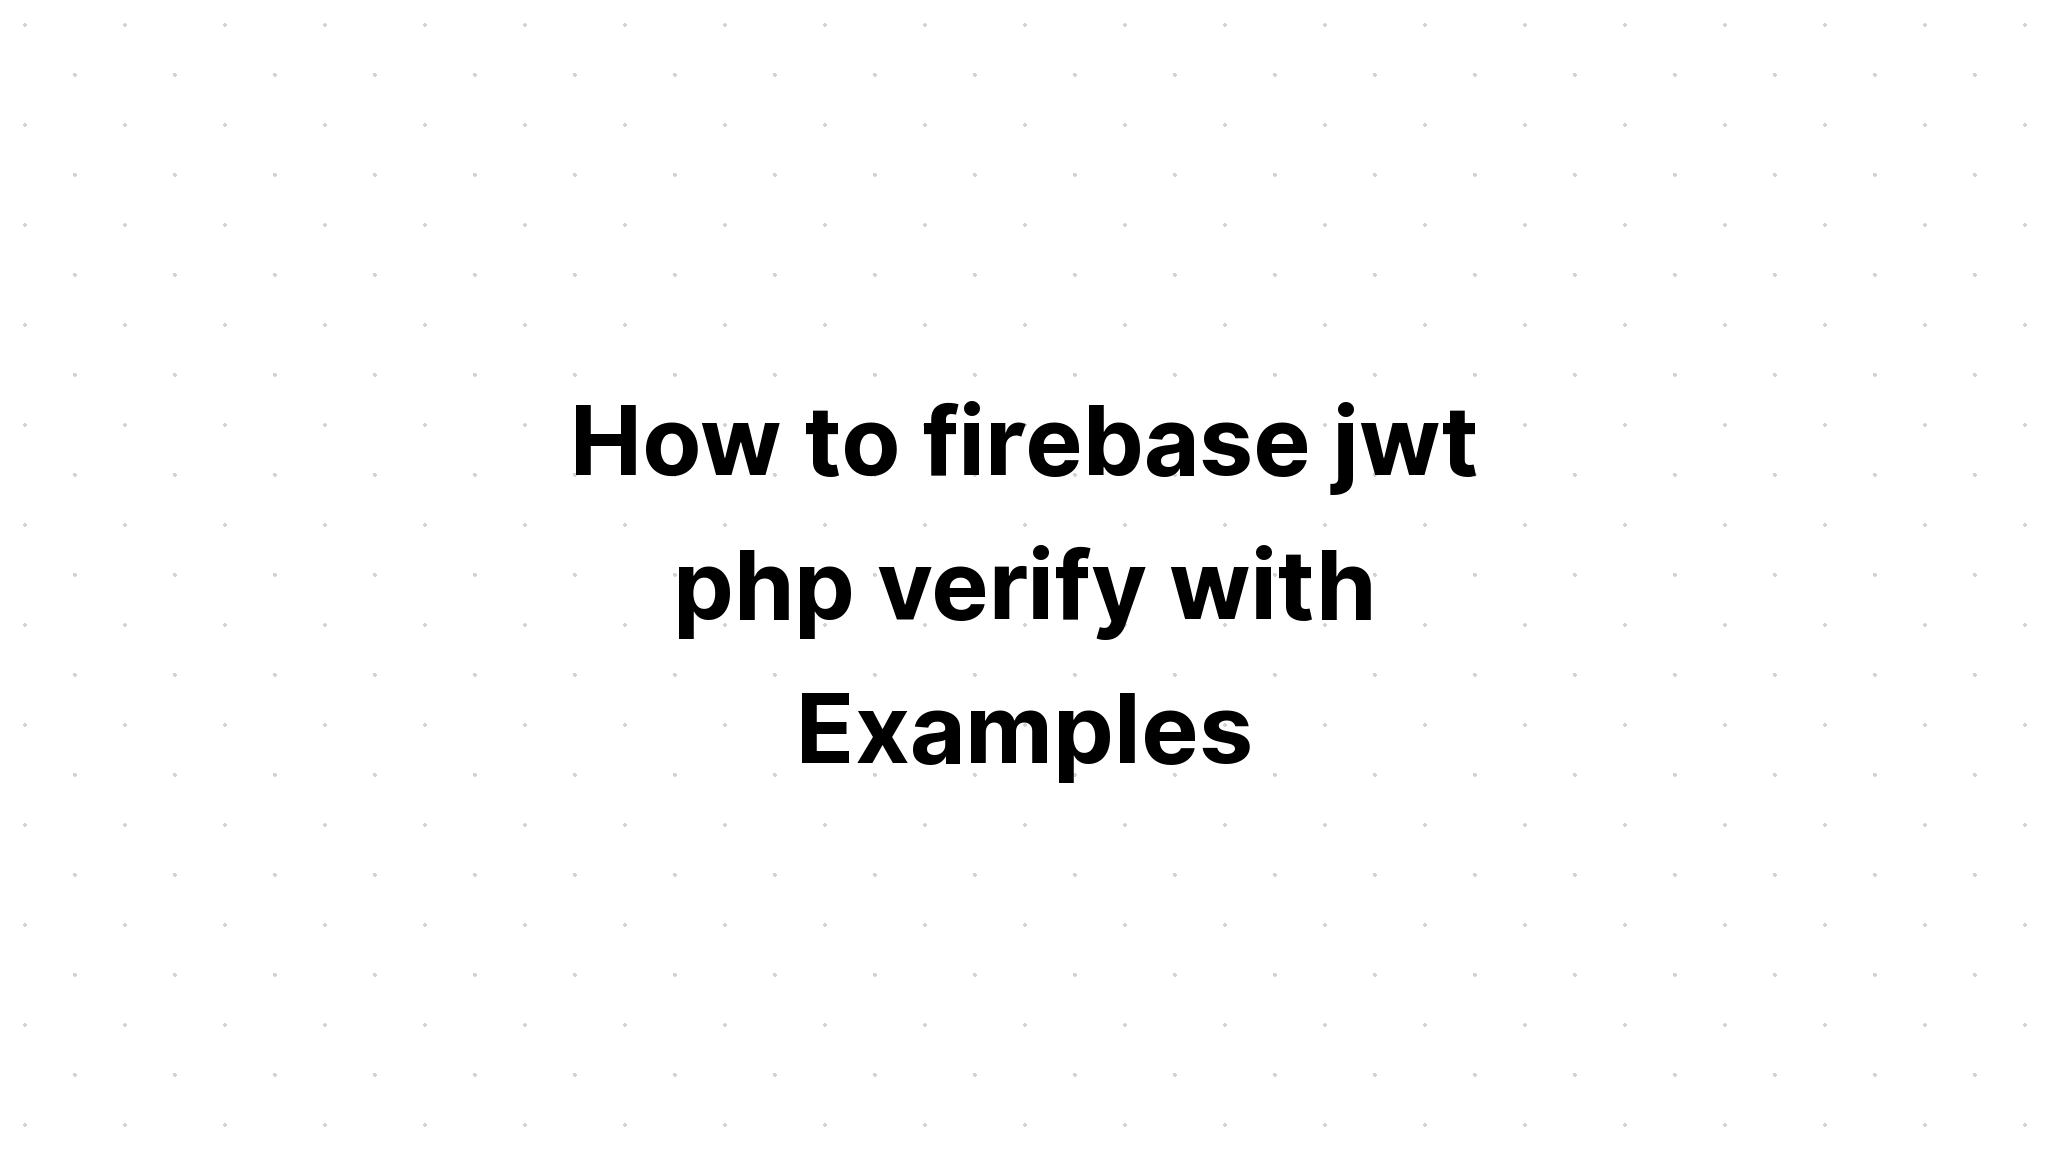 Cara firebase jwt php verifikasi dengan Contoh